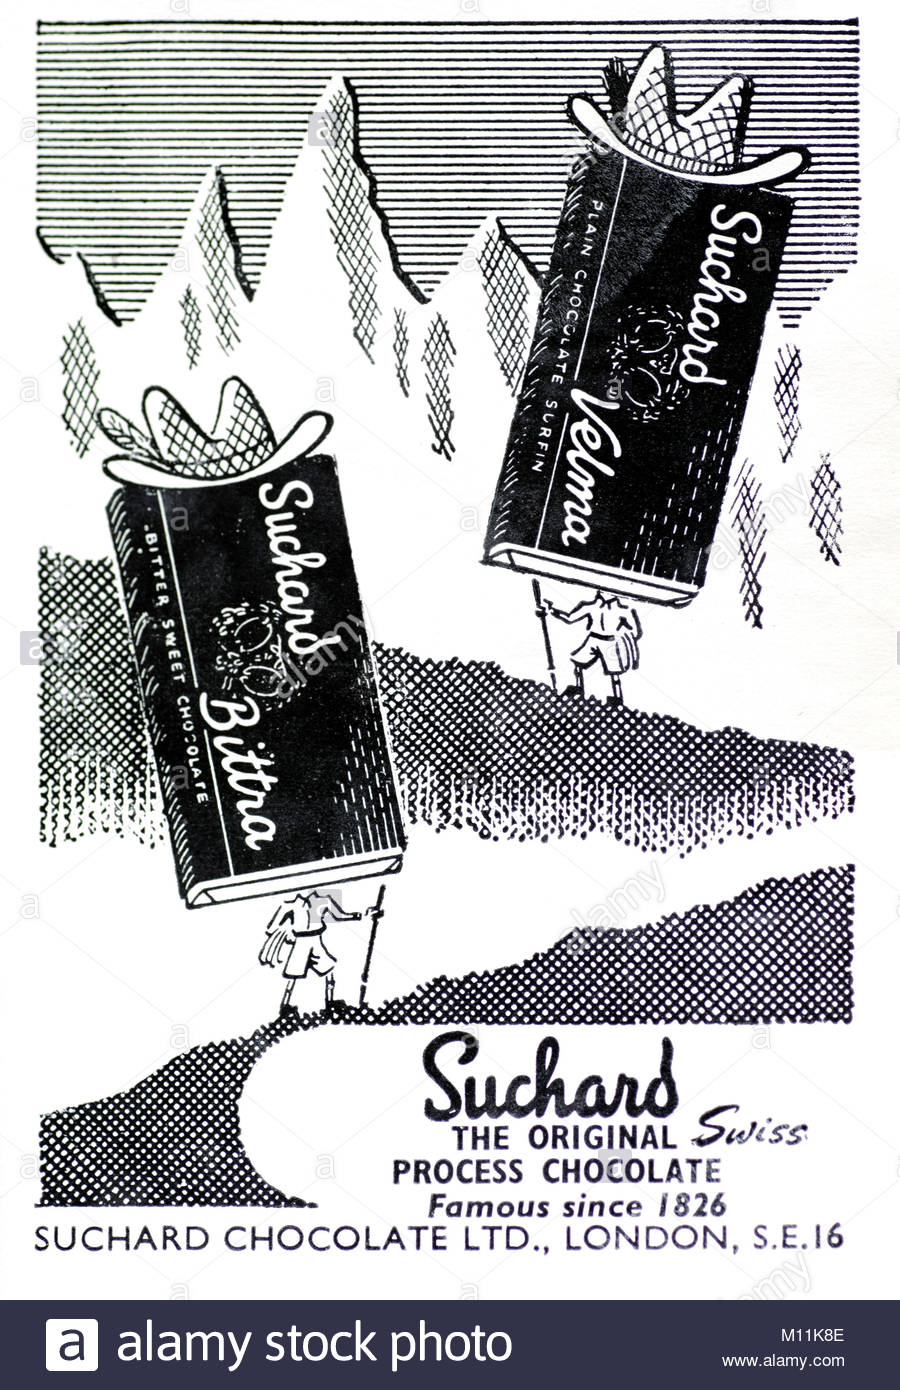 Suchard vintage advertising 1952 Stock Photo